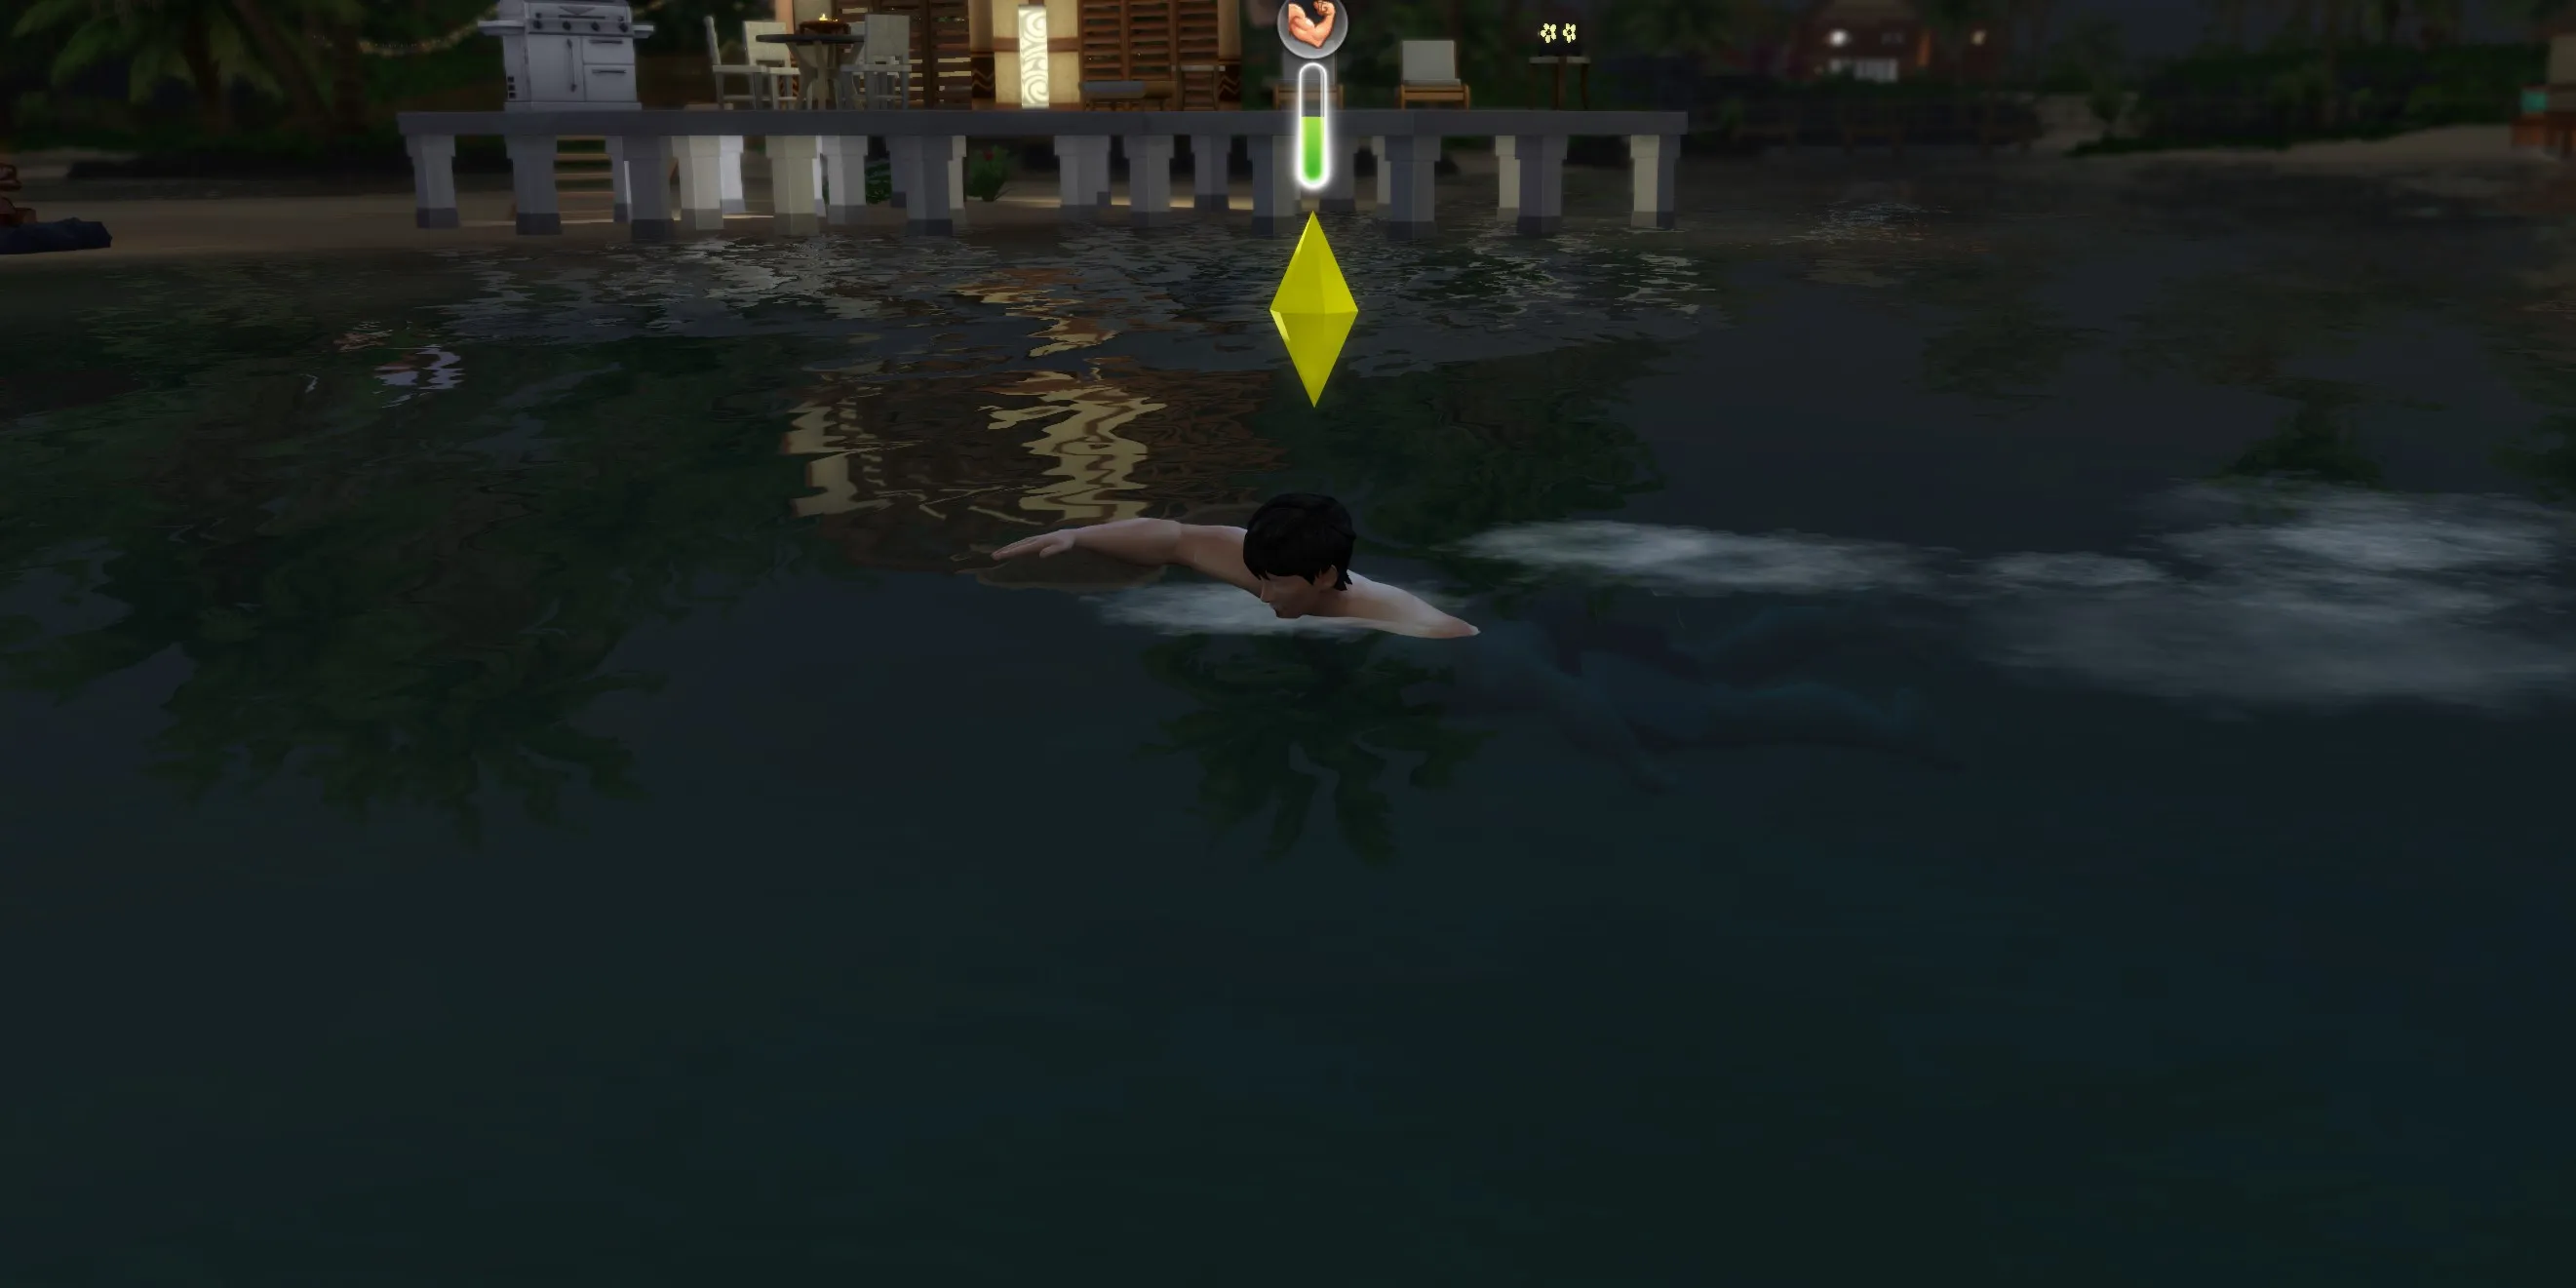 The Sims 4: A Sim Swimming at night